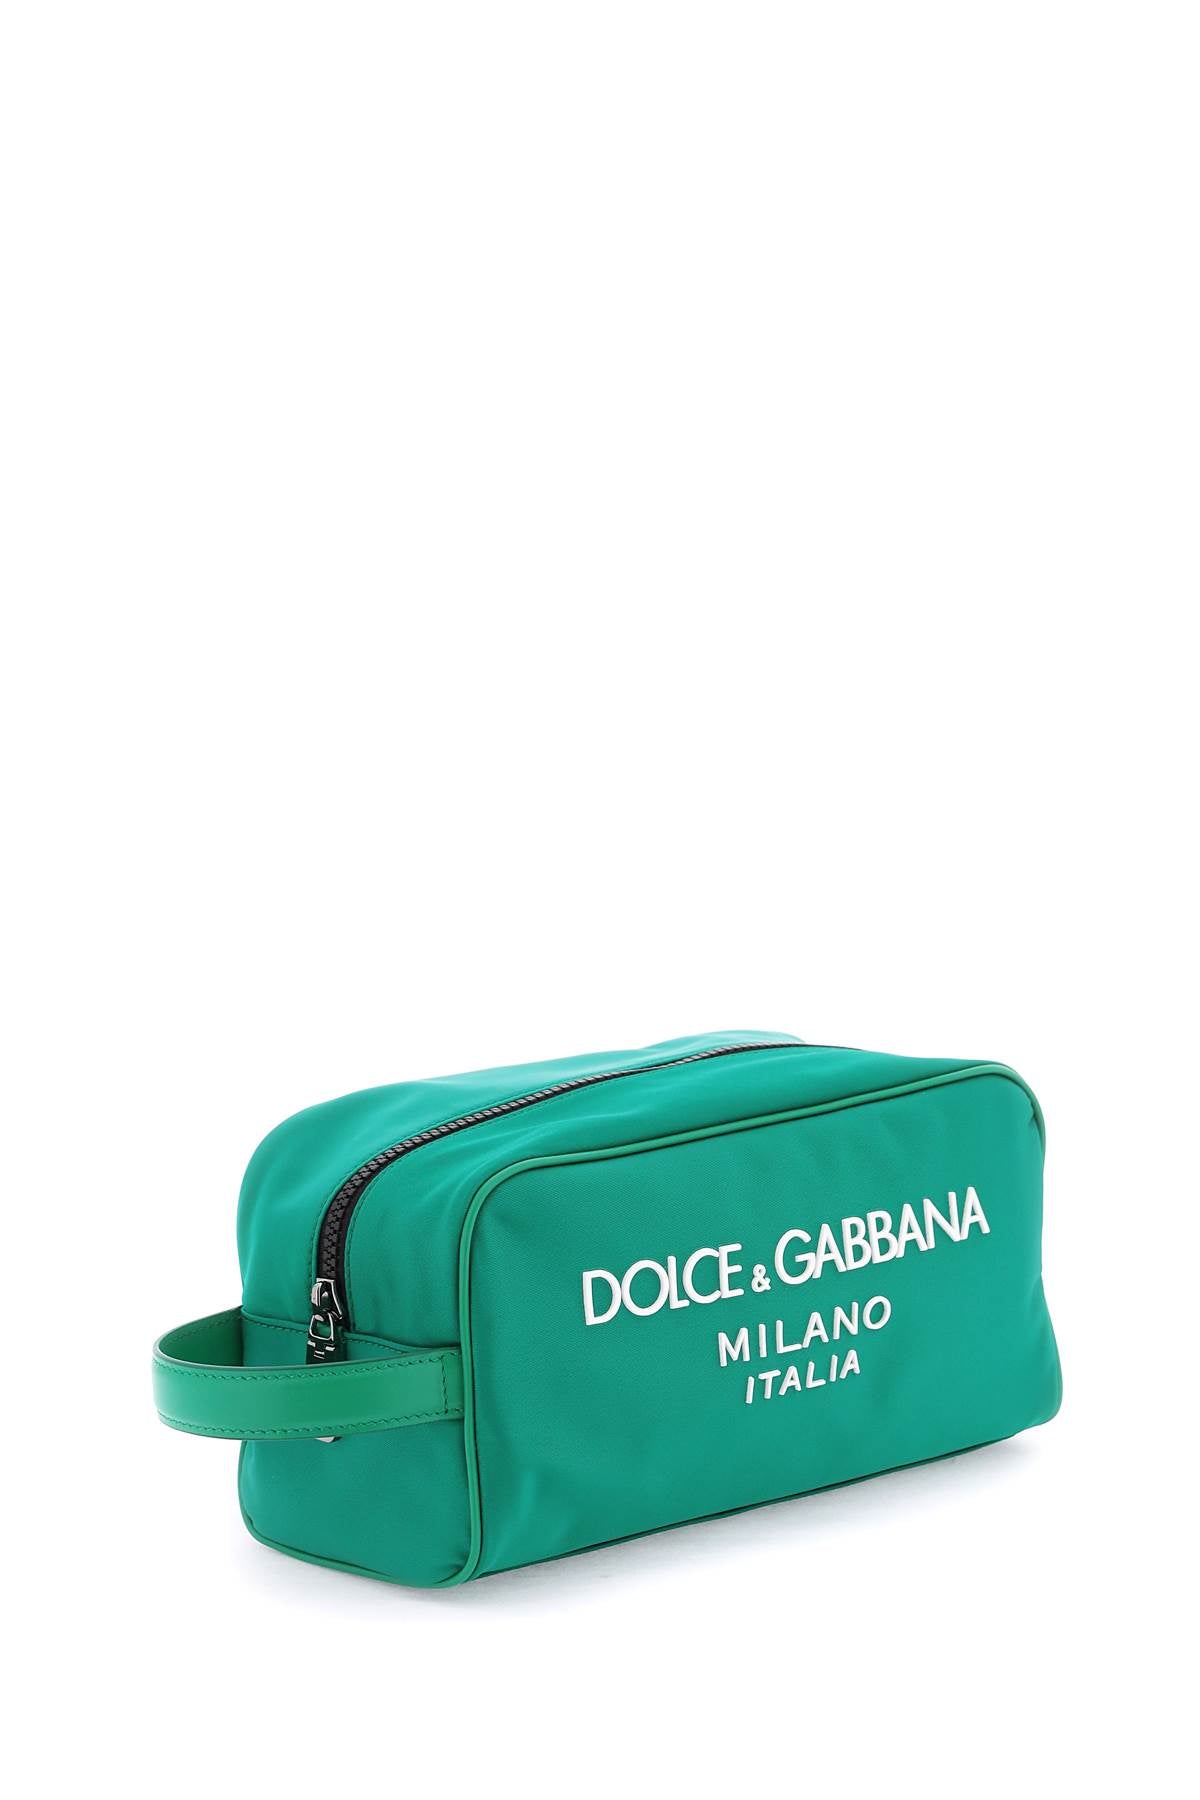 Dolce & Gabbana Dolce & gabbana rubberized logo beauty case